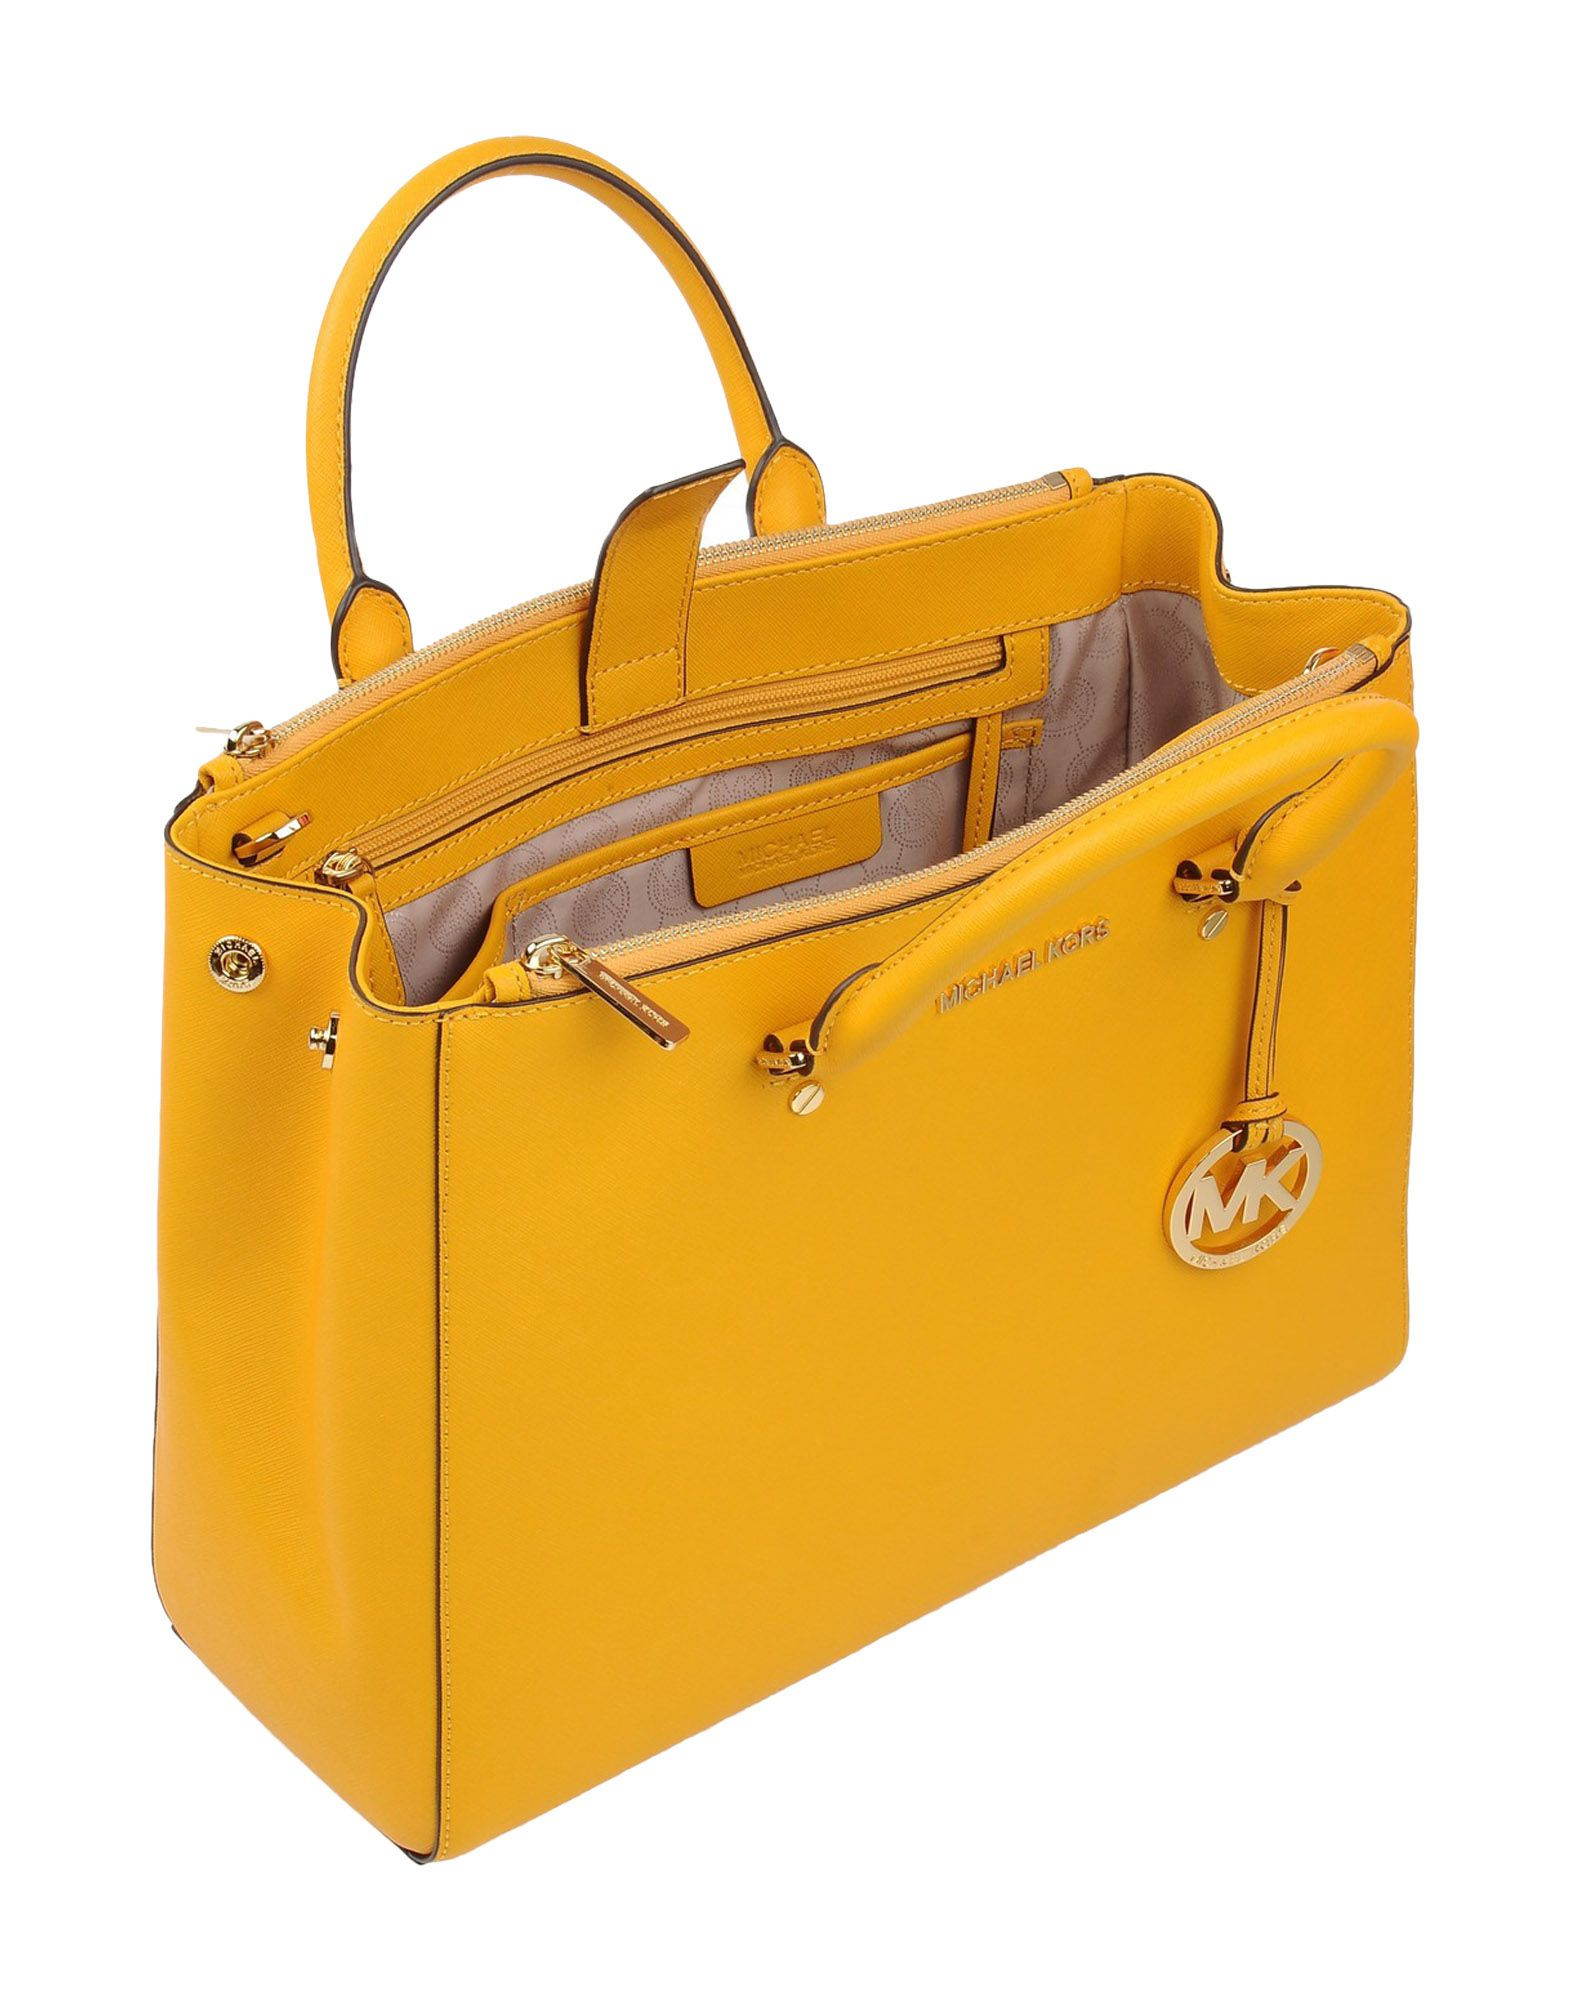 MK yellow purse